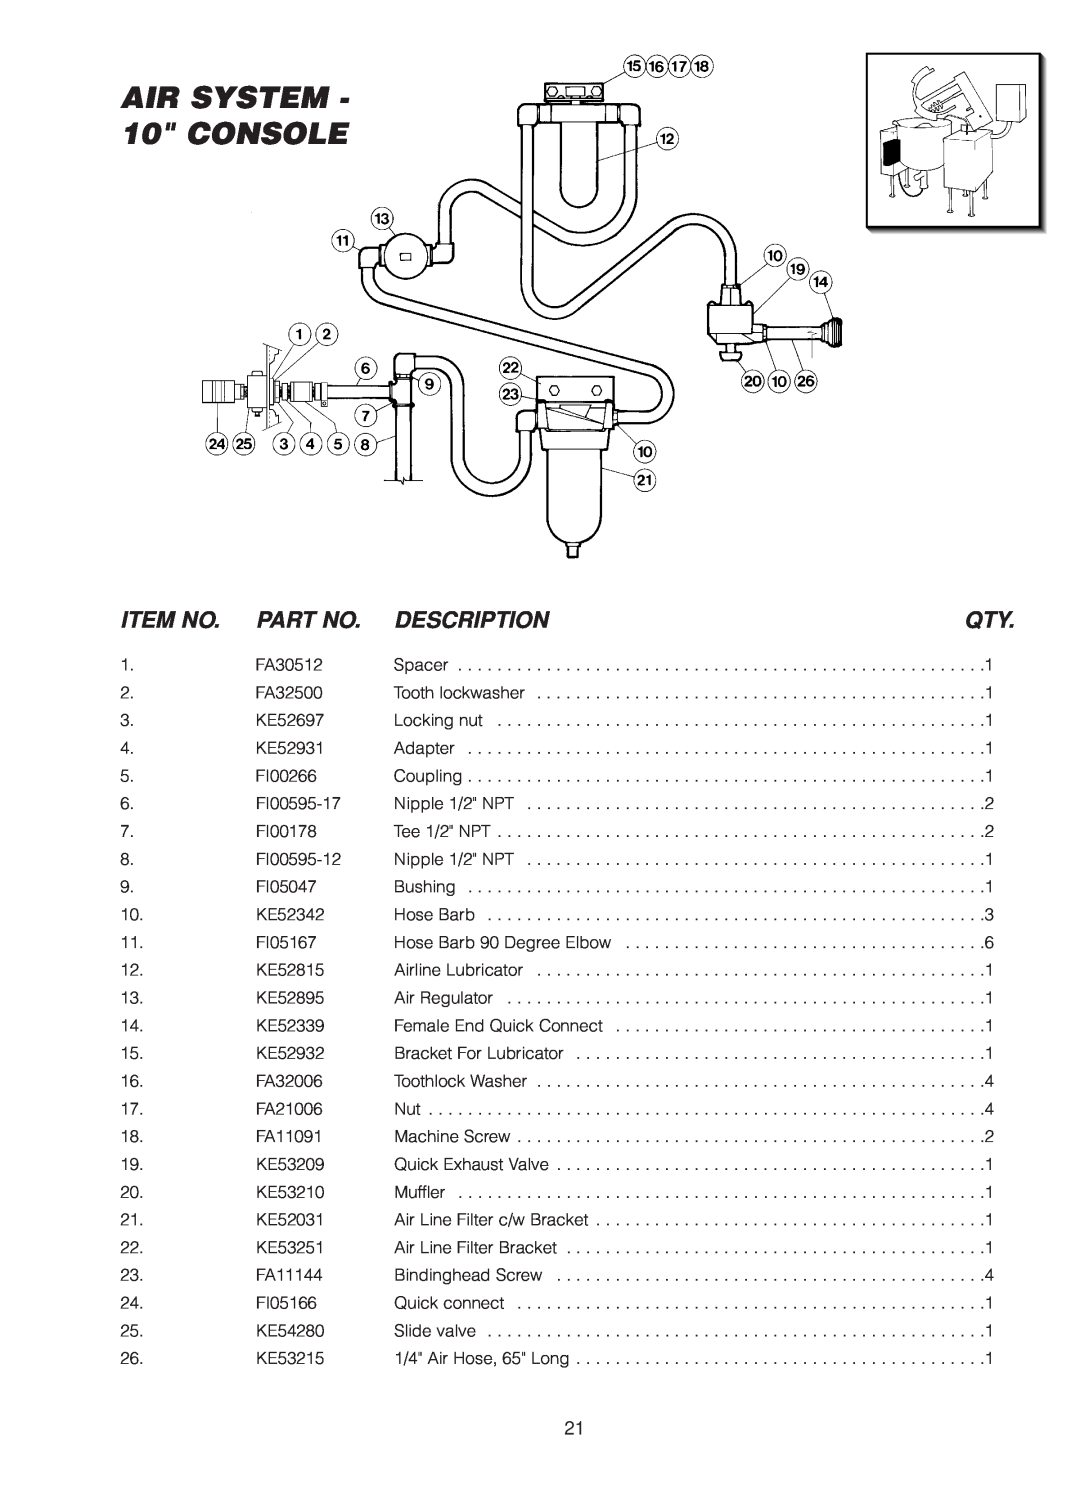 Cleveland Range MKDL-125-CC, MKDL-80-CC, MKDL-40-CC manual AIR SYSTEM - 10 CONSOLE, Item No, Description 